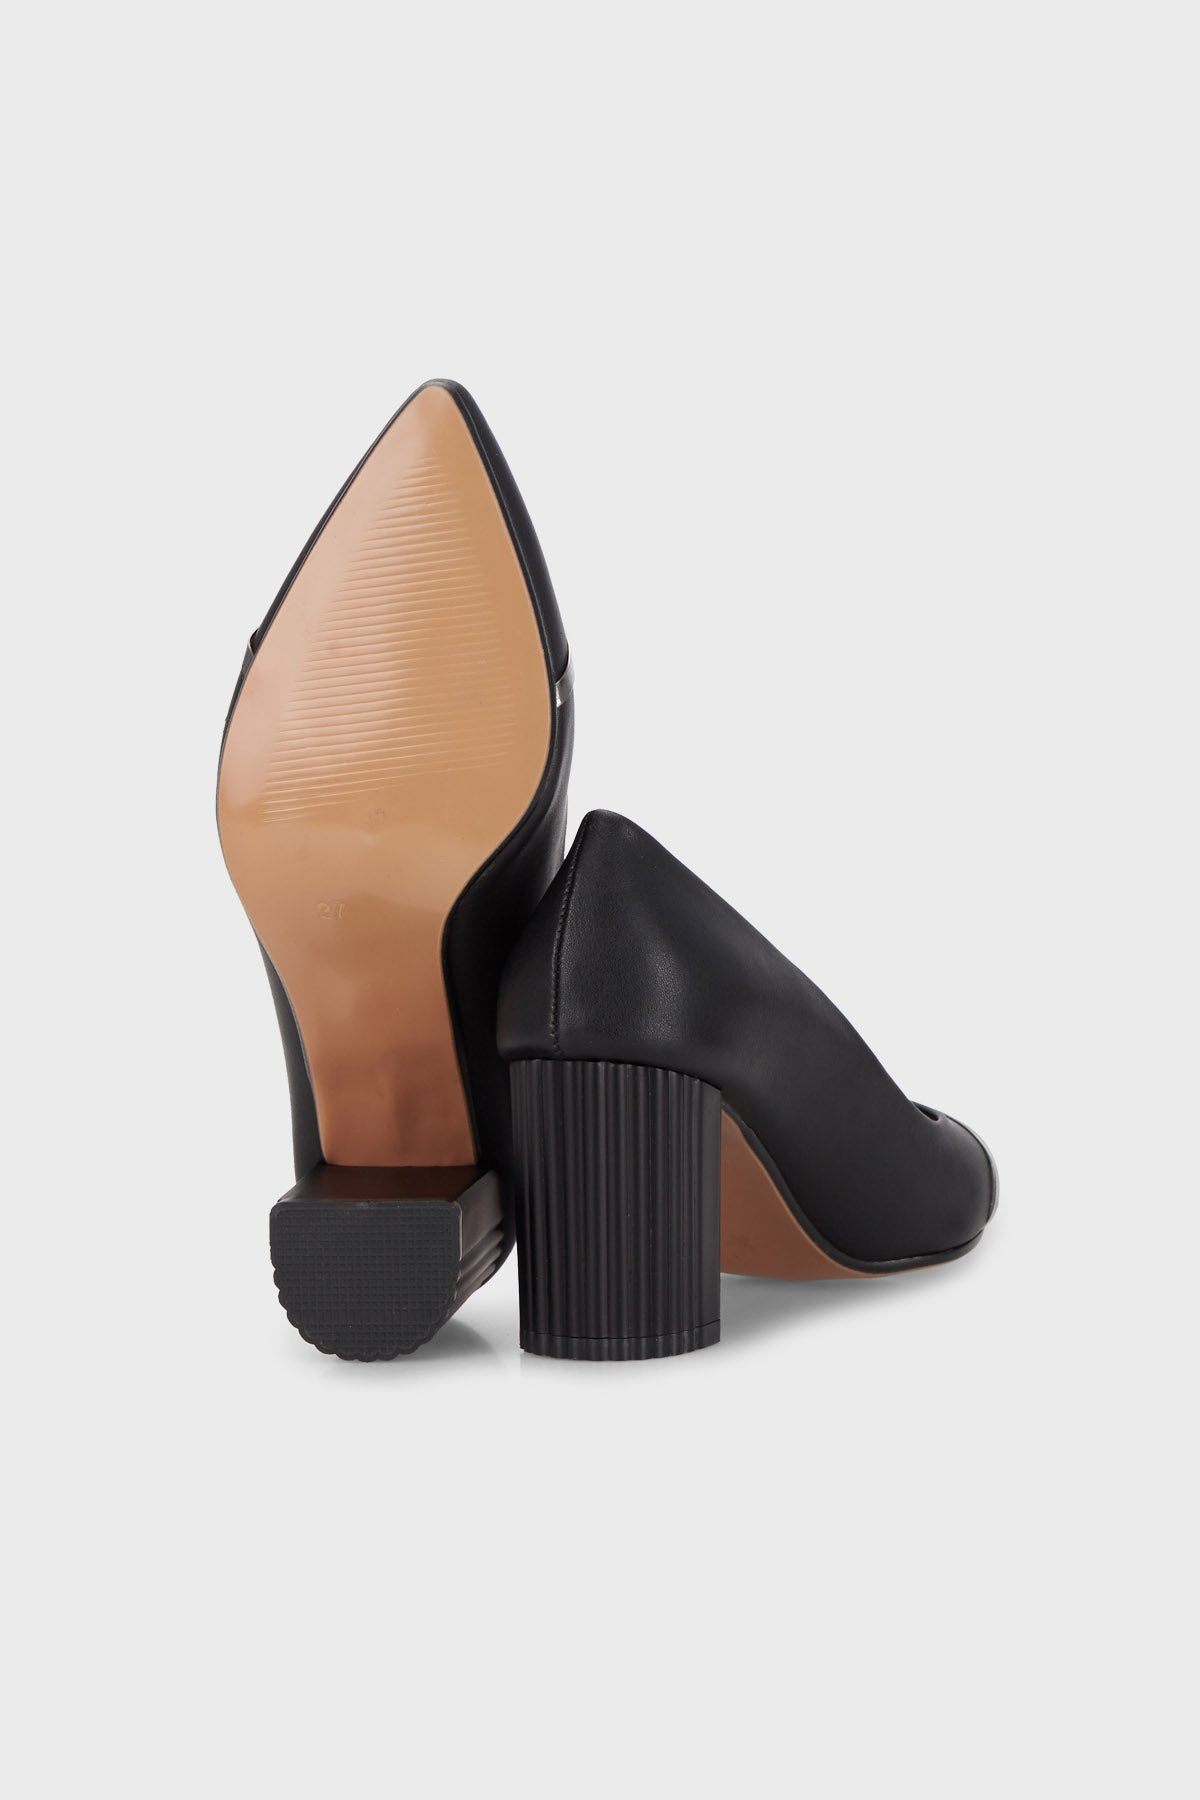 Pierre Cardin Topuklu Bayan Ayakkabı PC51203 SİYAH